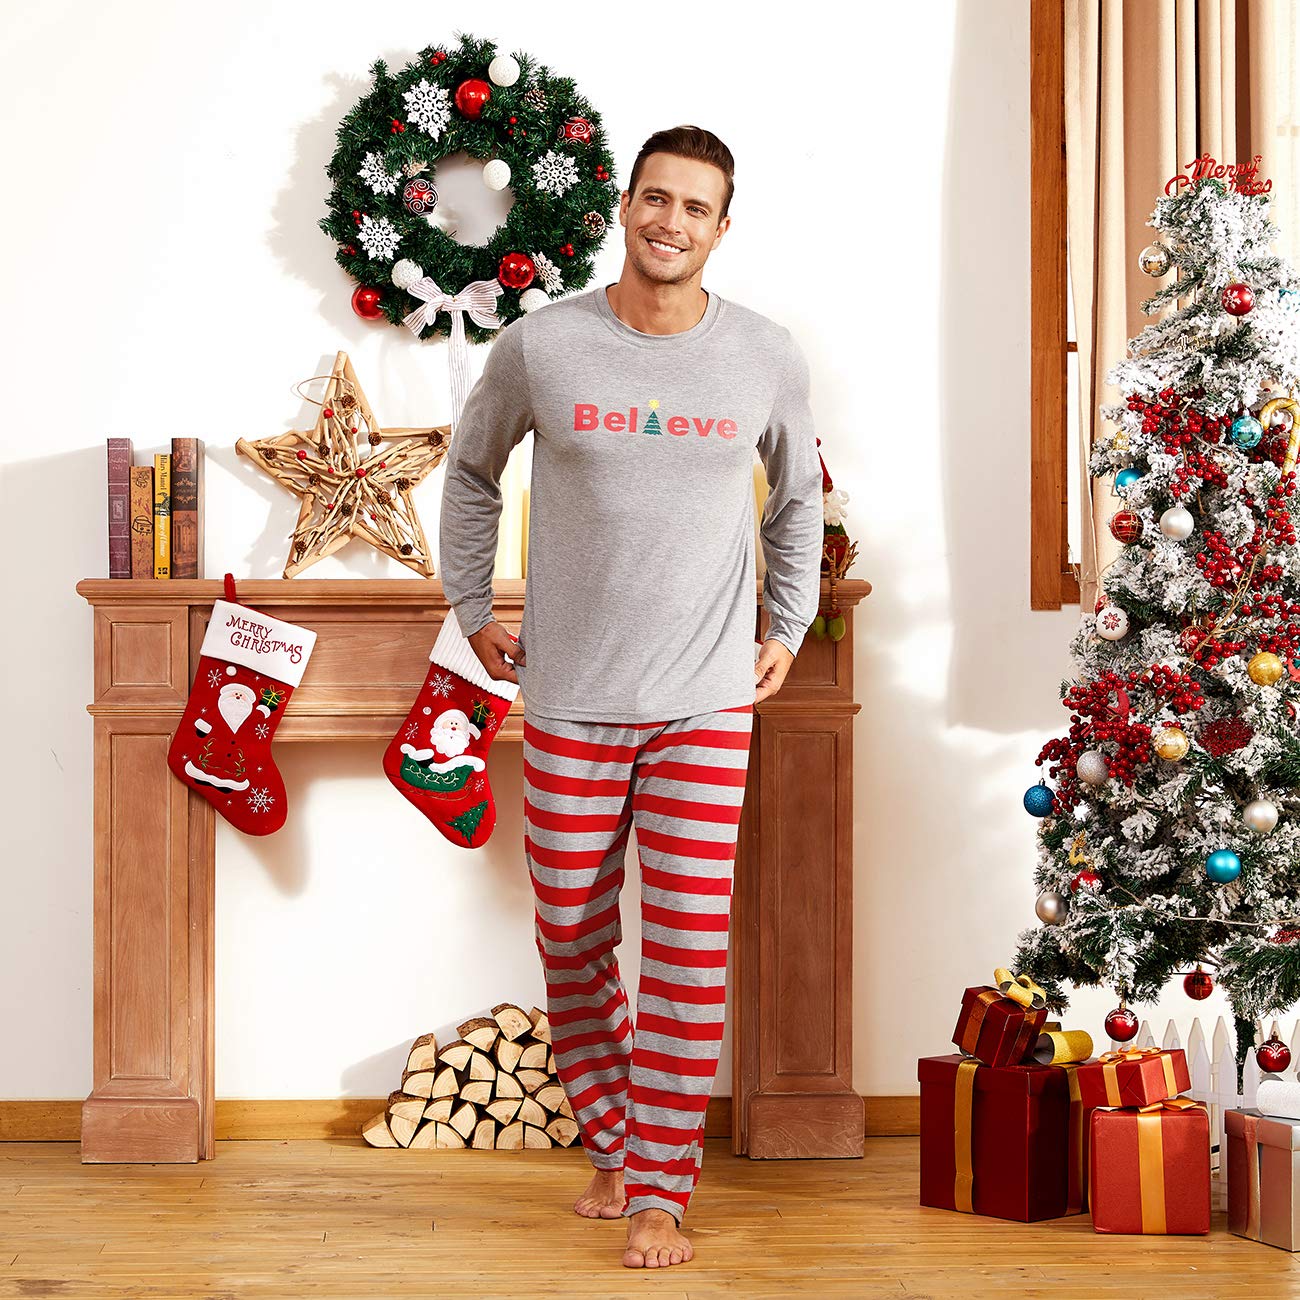 Christmas Pajamas for the Whole Family - My Texas House